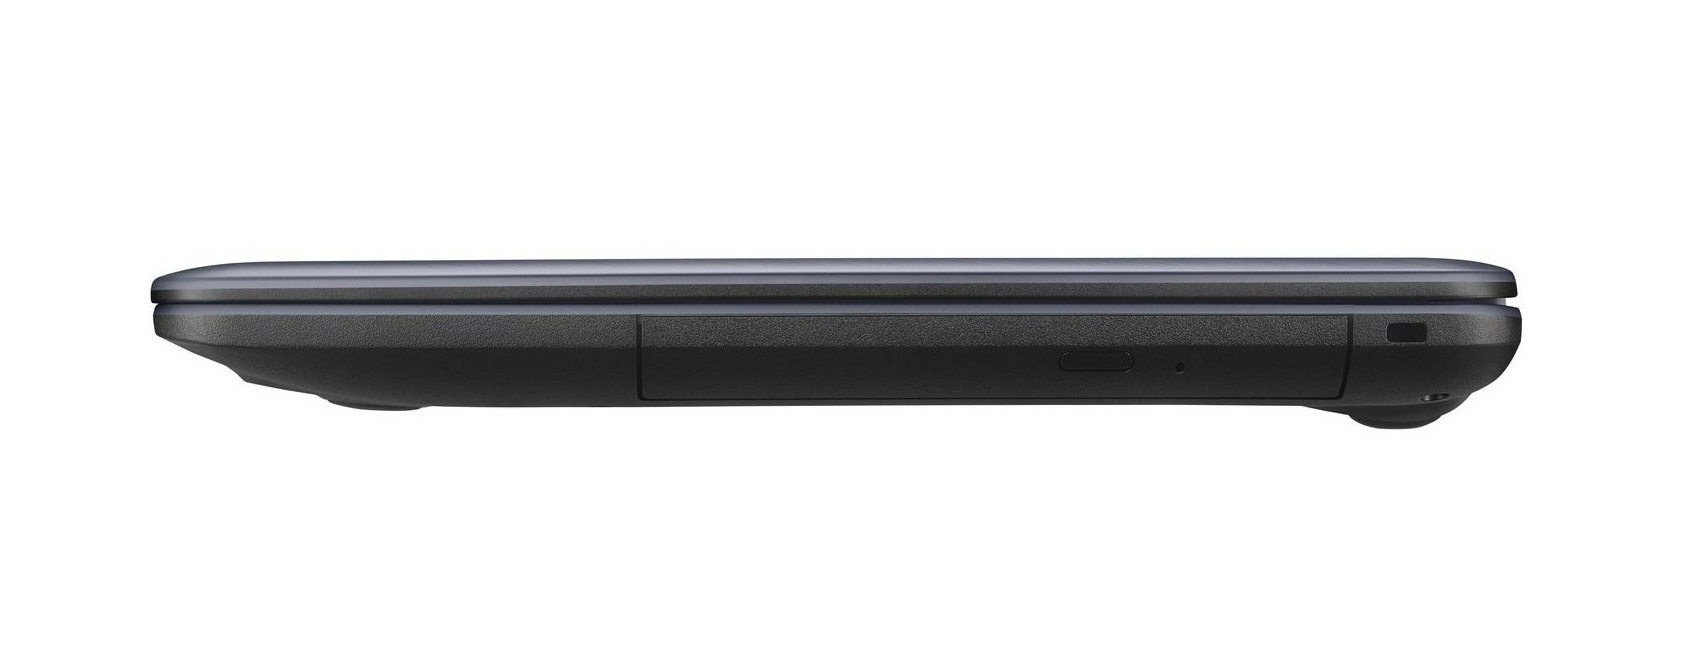 Ноутбук ASUS VivoBook X543MA-GQ1139 Gray (90NB0IR7-M22070)